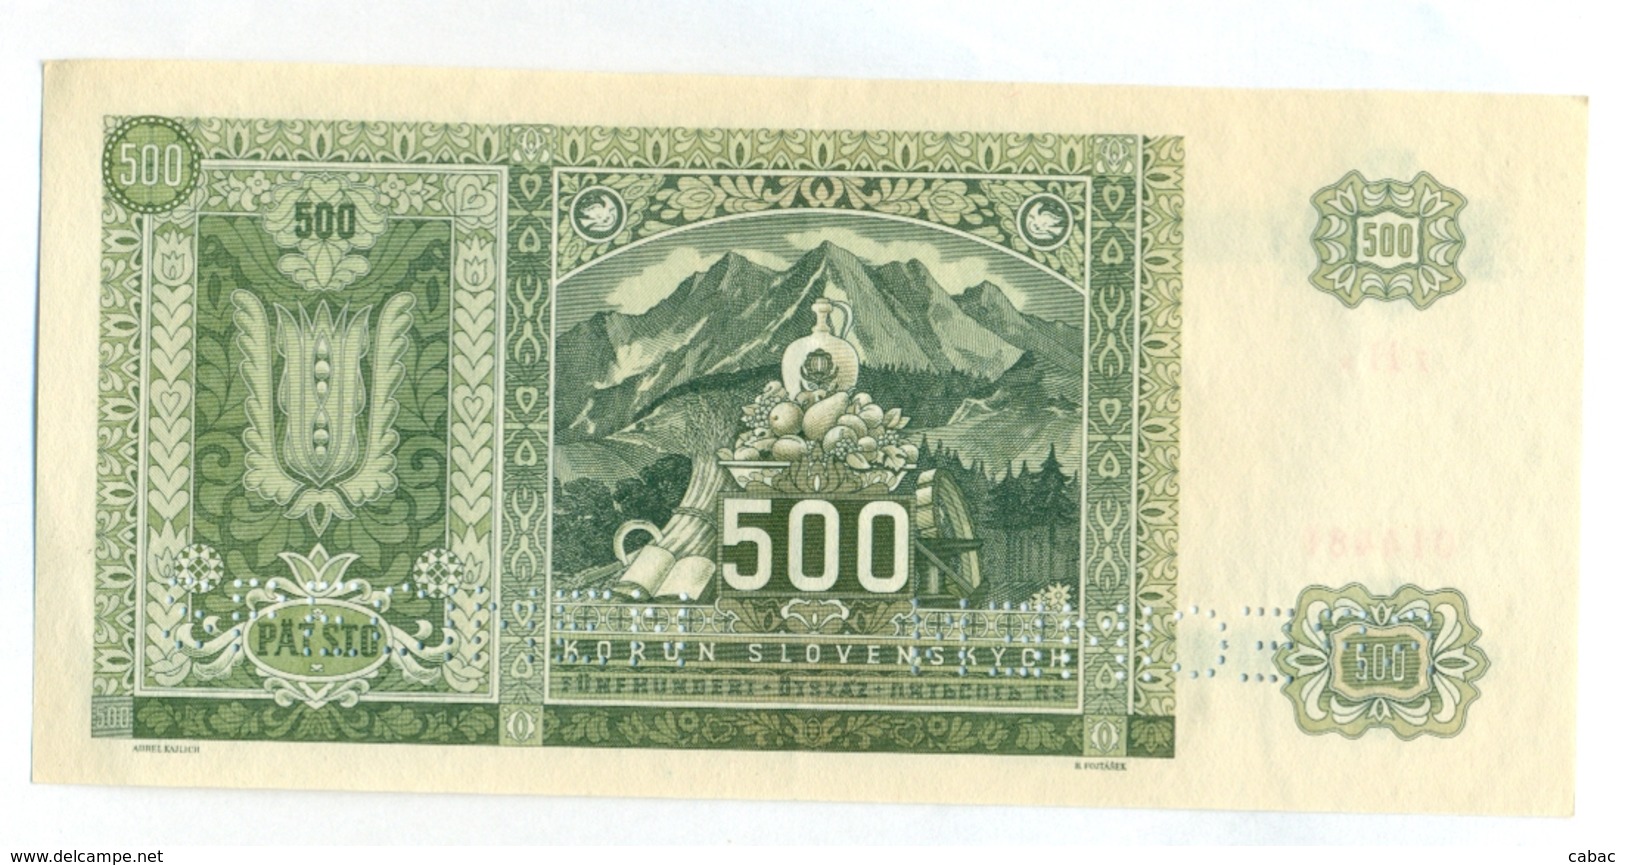 Slovakia 500 Korun 1941 SPECIMEN, Slovaquie,Slovacchia, Slowakei, Patsto Korun, 7 H A + Stamp, RARE - Slovakia